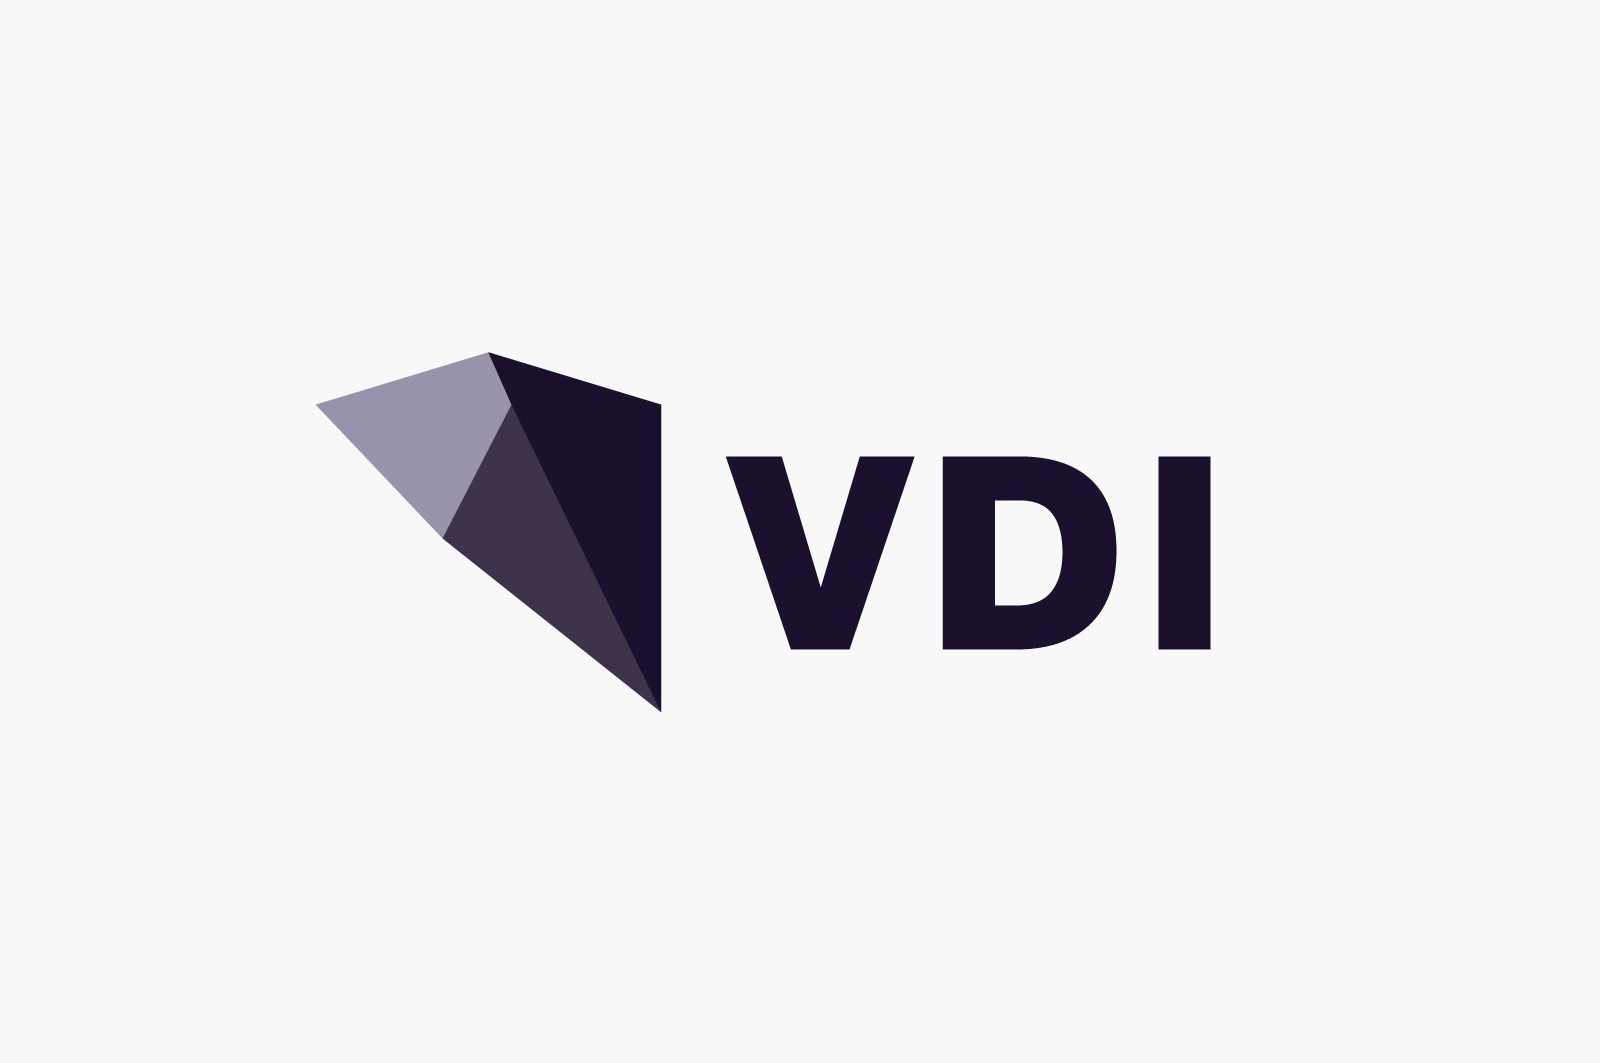 A Brand Identity for VDI by Bullhorn Creative